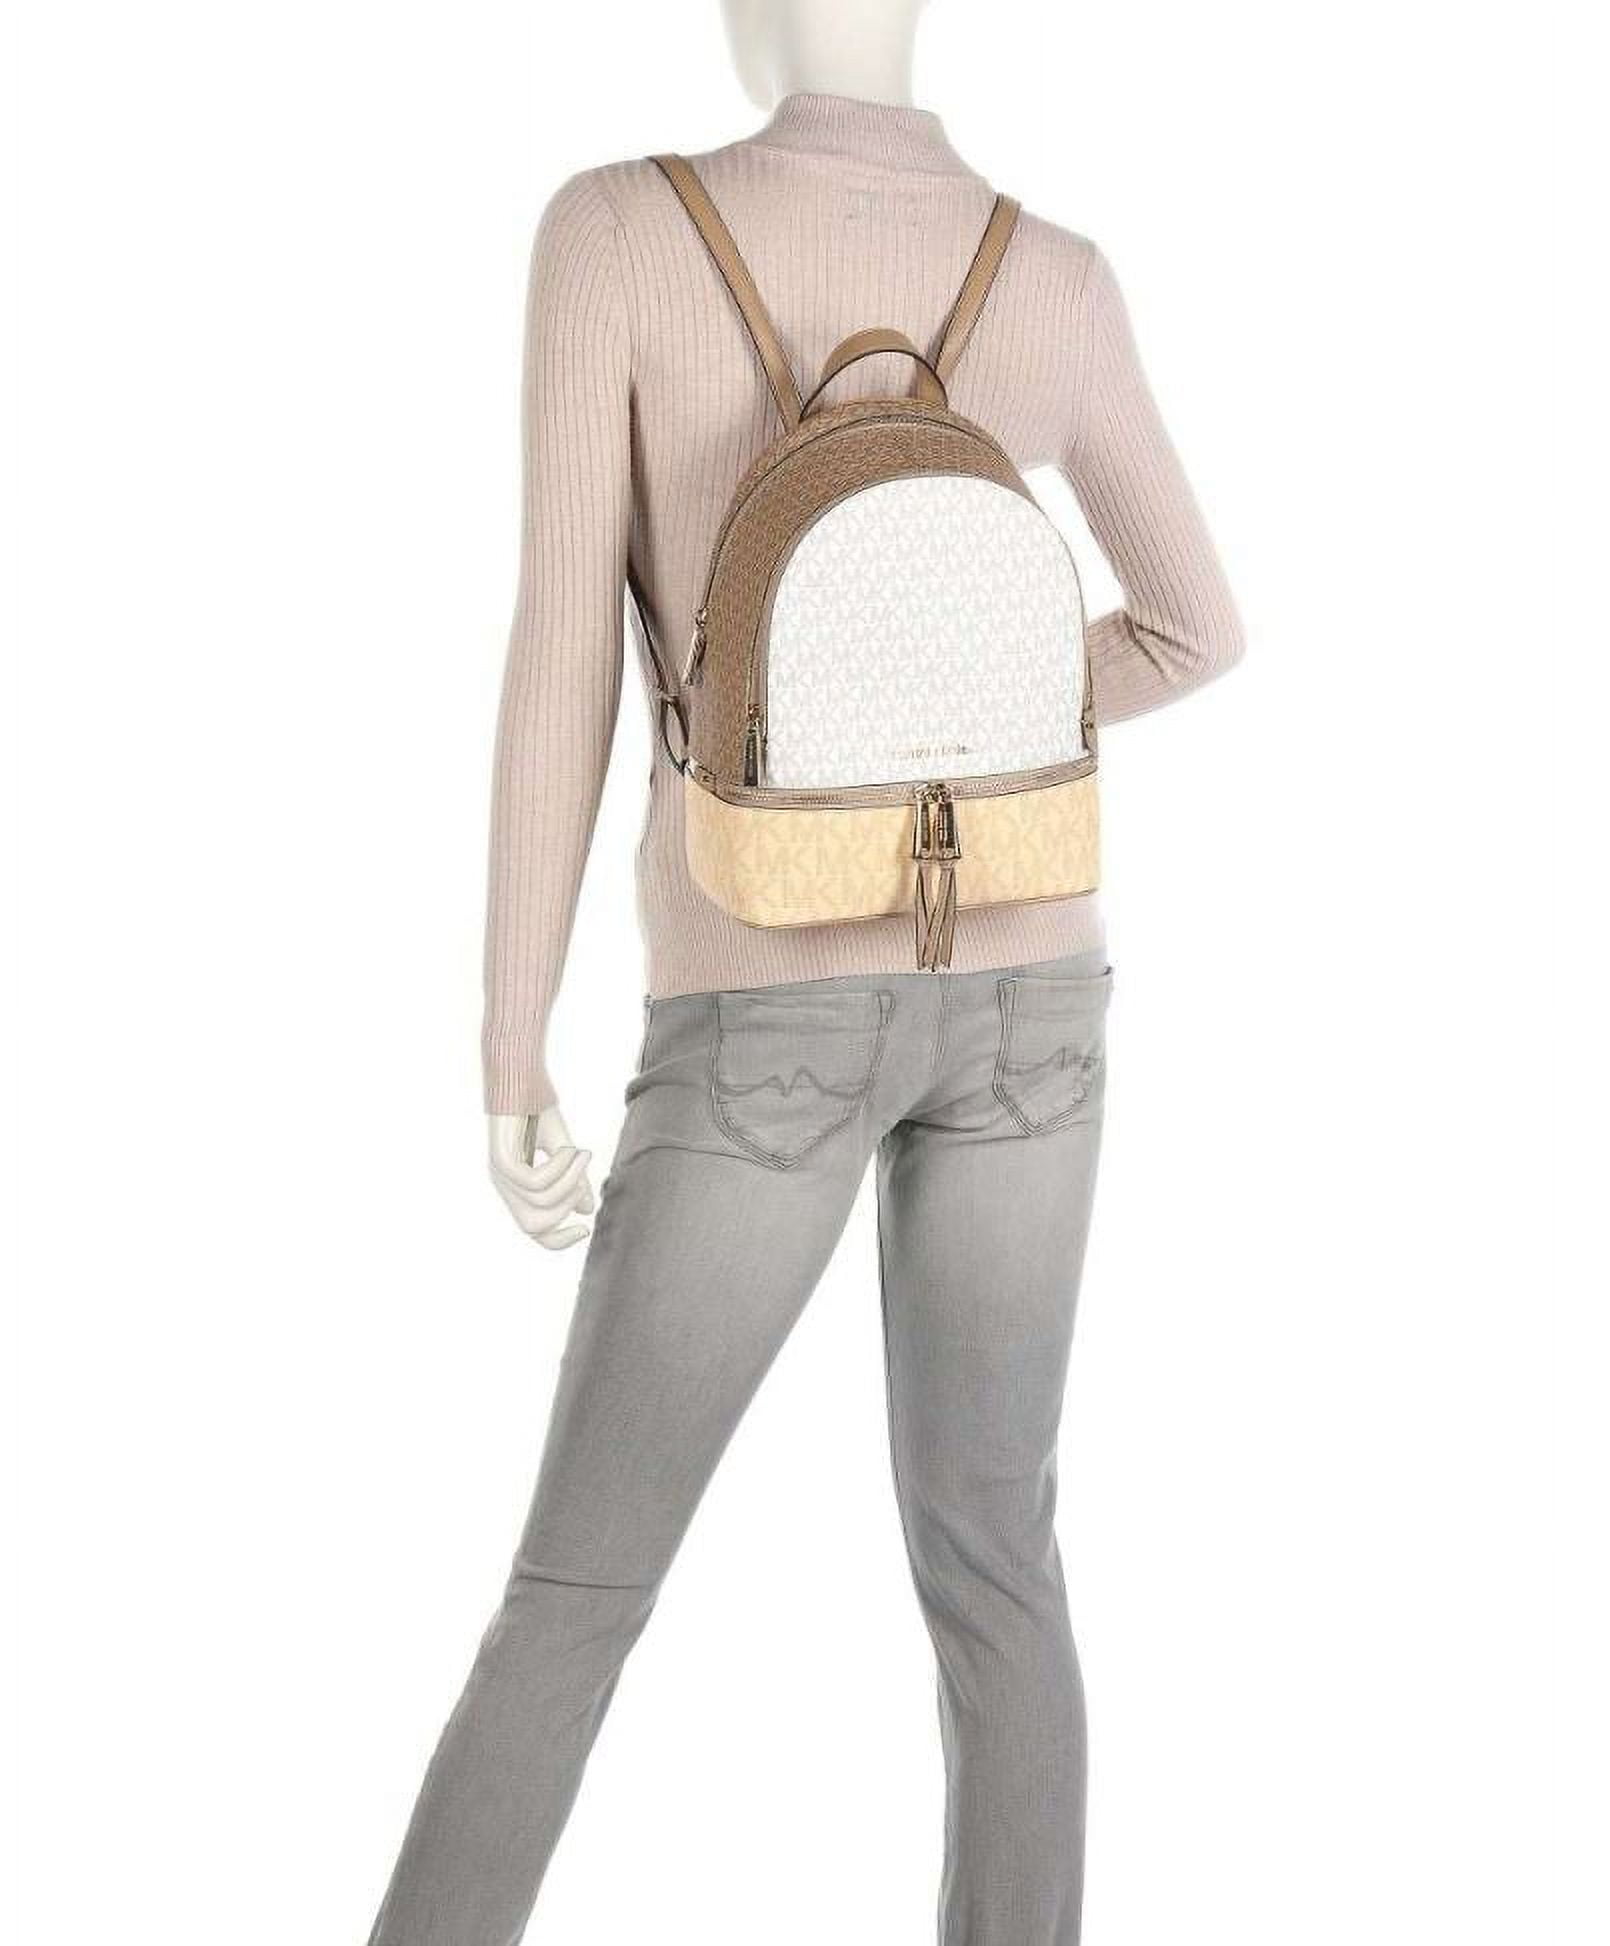 Michael Kors Womens Rhea Zip Medium Backpack Smokey Rose Multi 2  30S2GEZB8B-99 One Size 